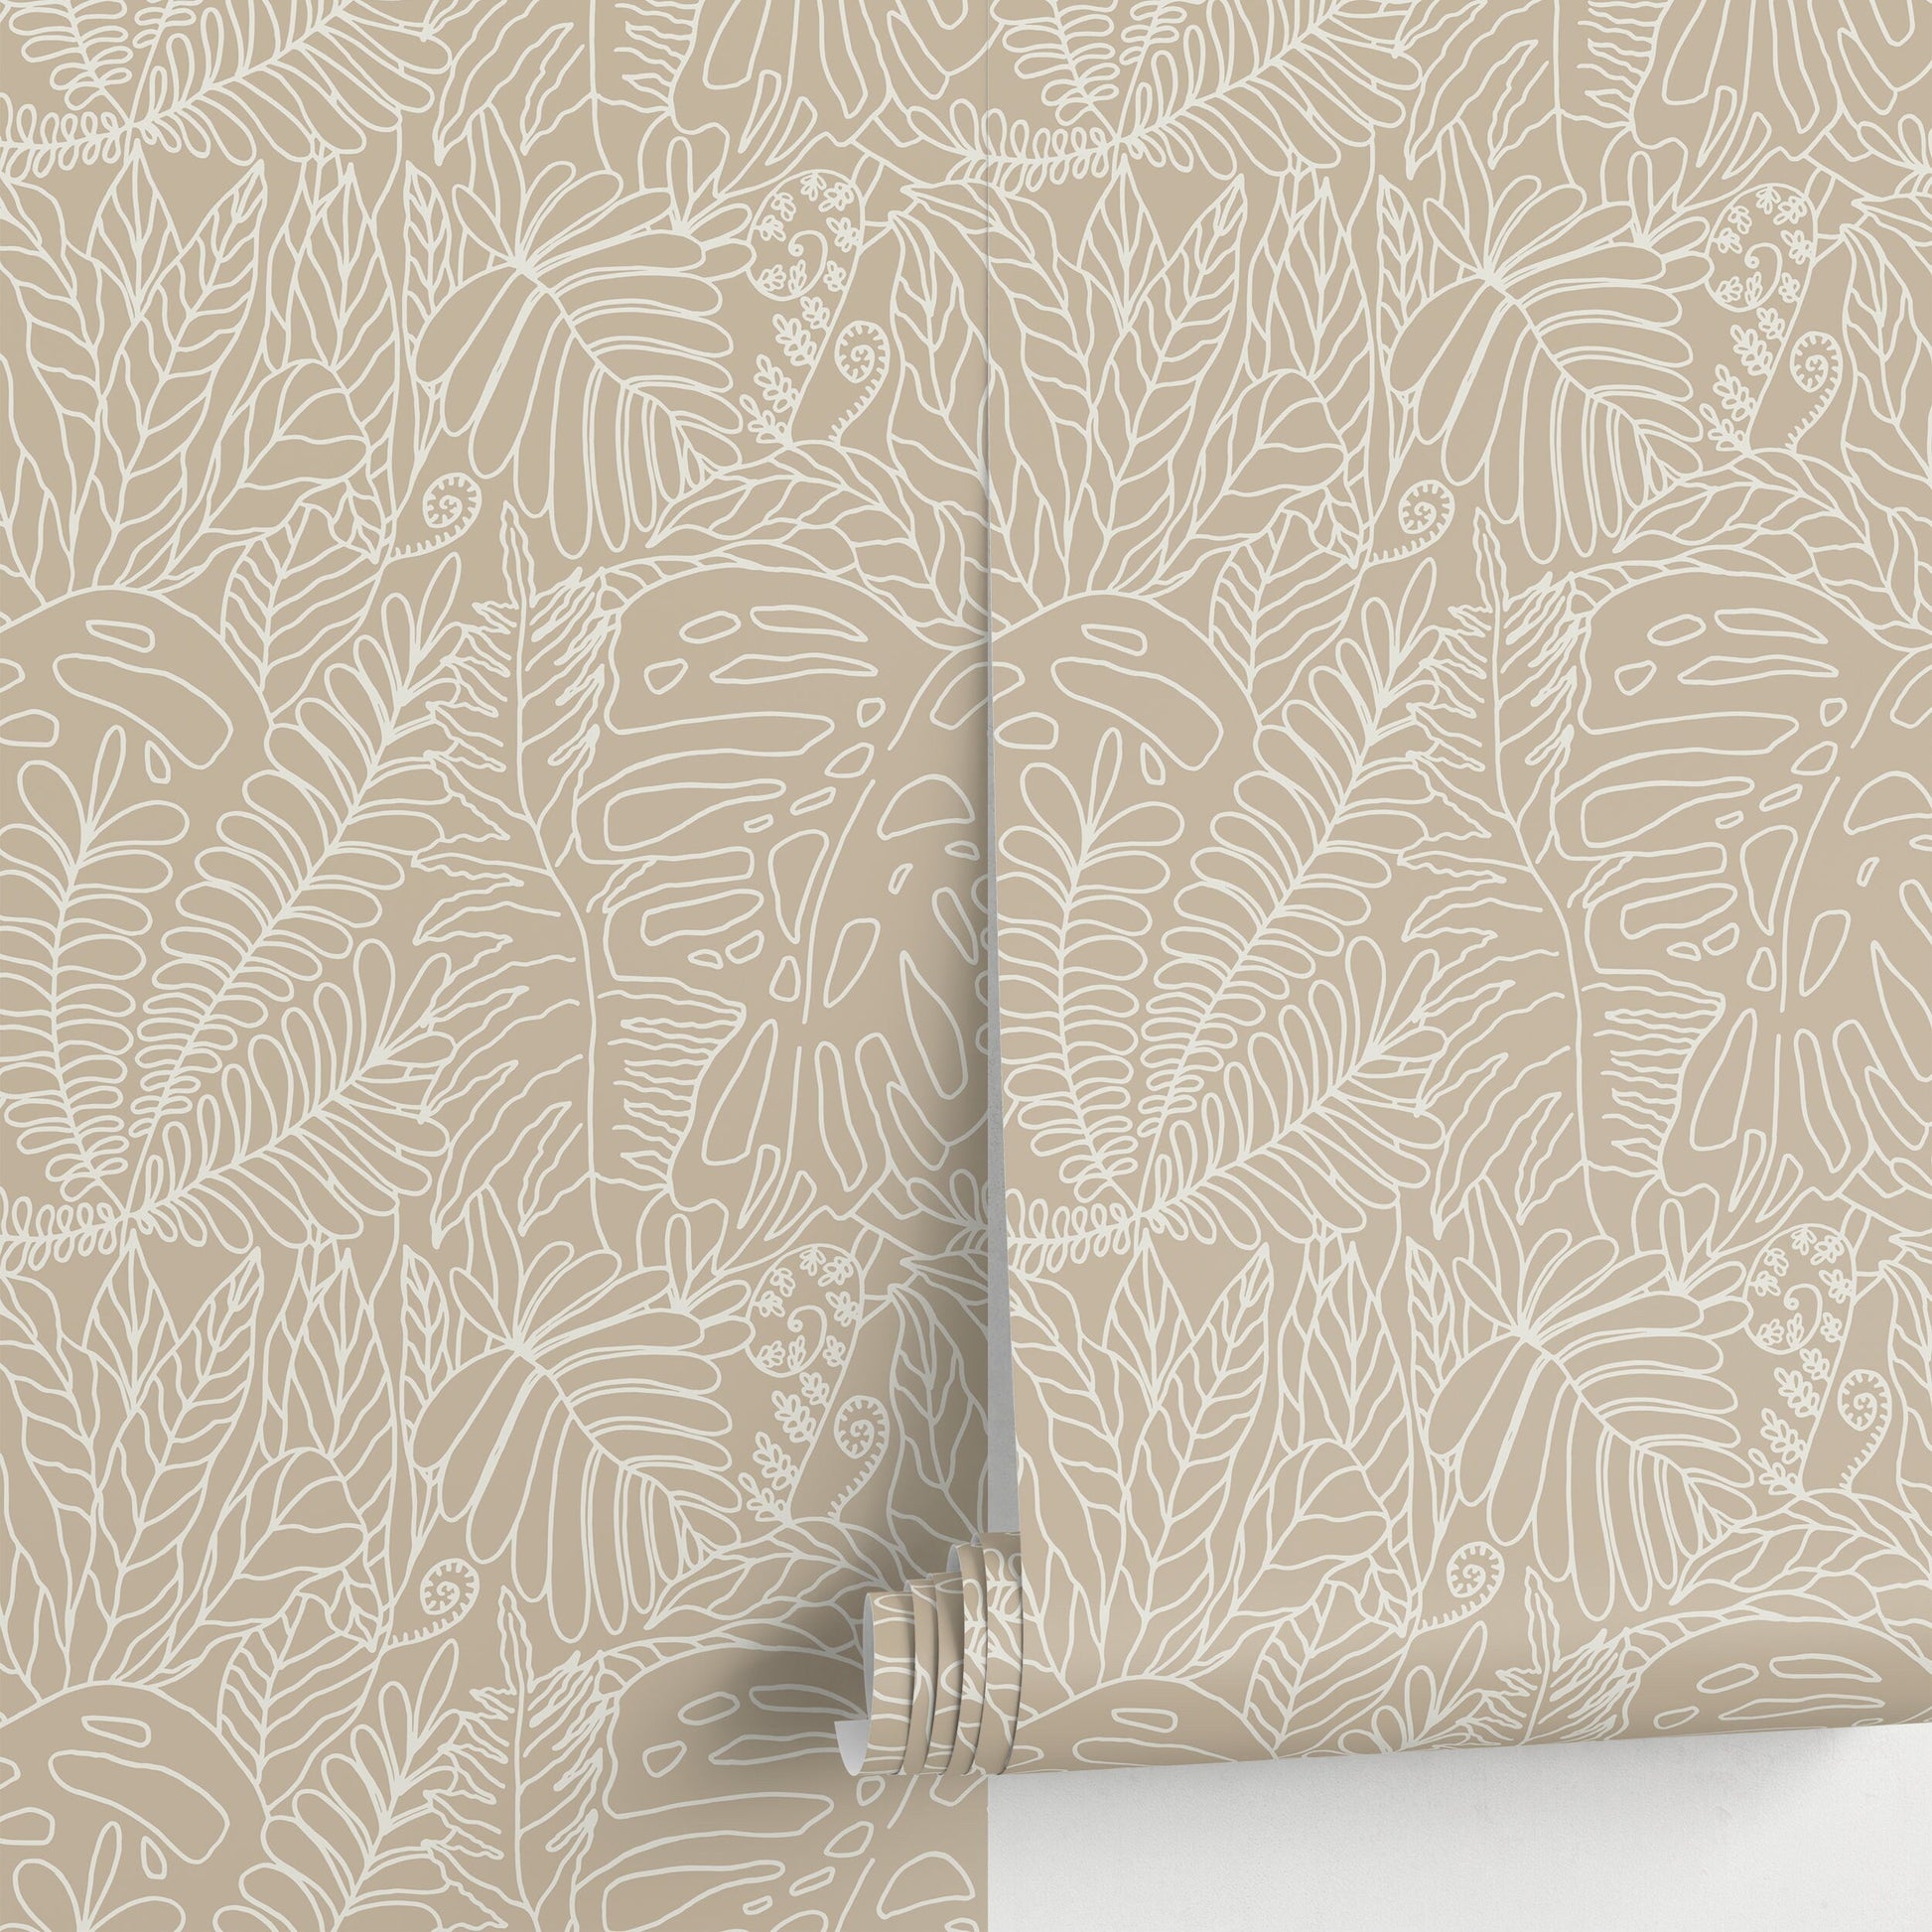 Beige Leaf Boho Wallpaper / Peel and Stick Wallpaper Removable Wallpaper Home Decor Wall Art Wall Decor Room Decor - C945